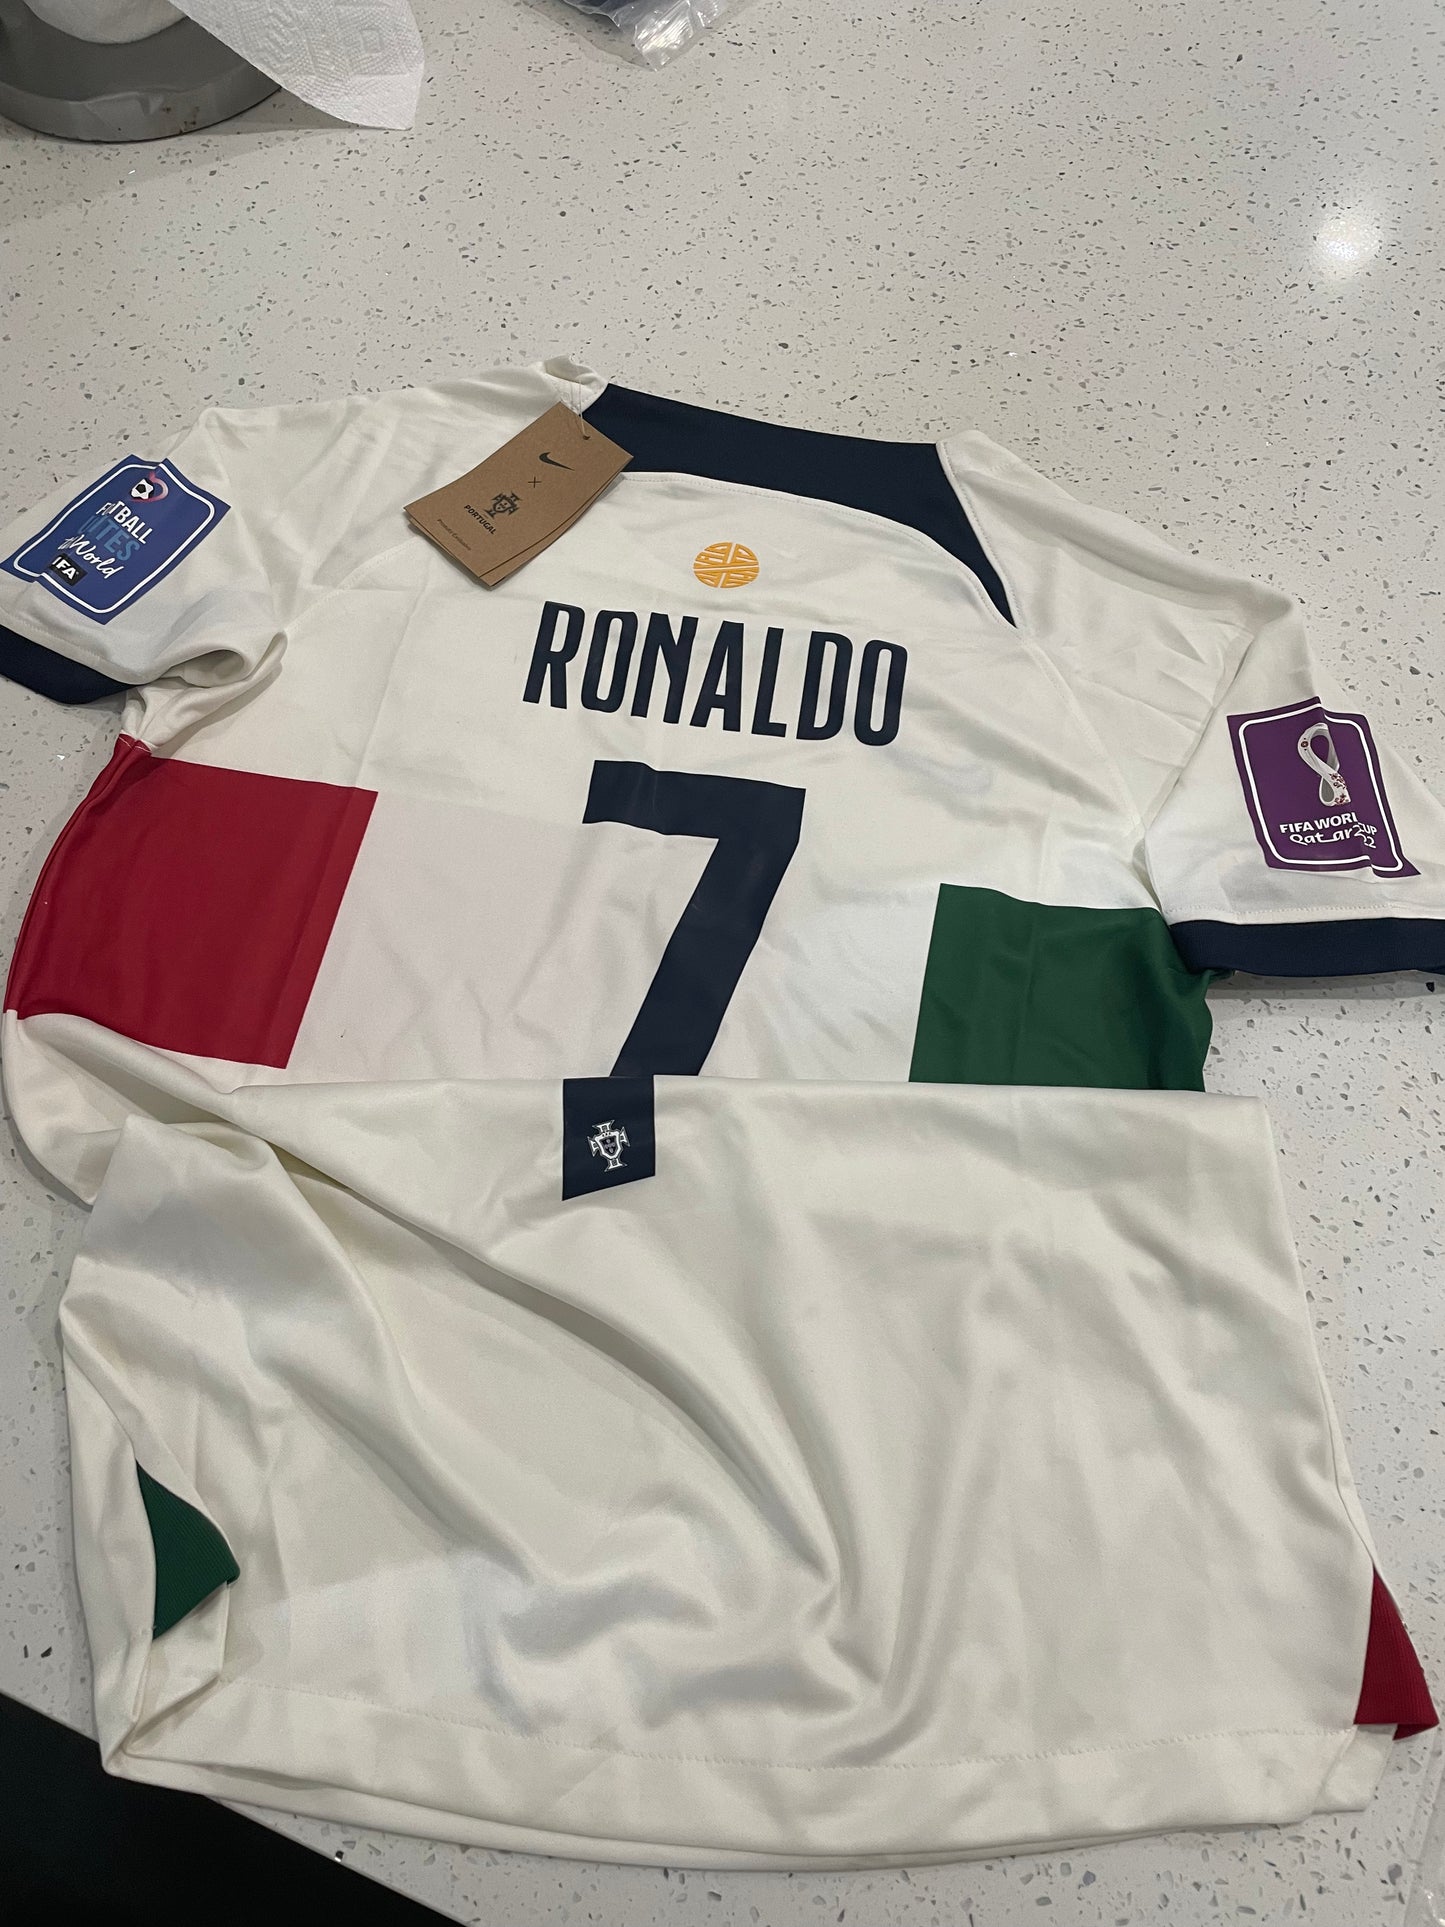 Cristiano Ronaldo Nike 2022 FIFA World Cup Qatar Patch Portugal National Team Jersey - White